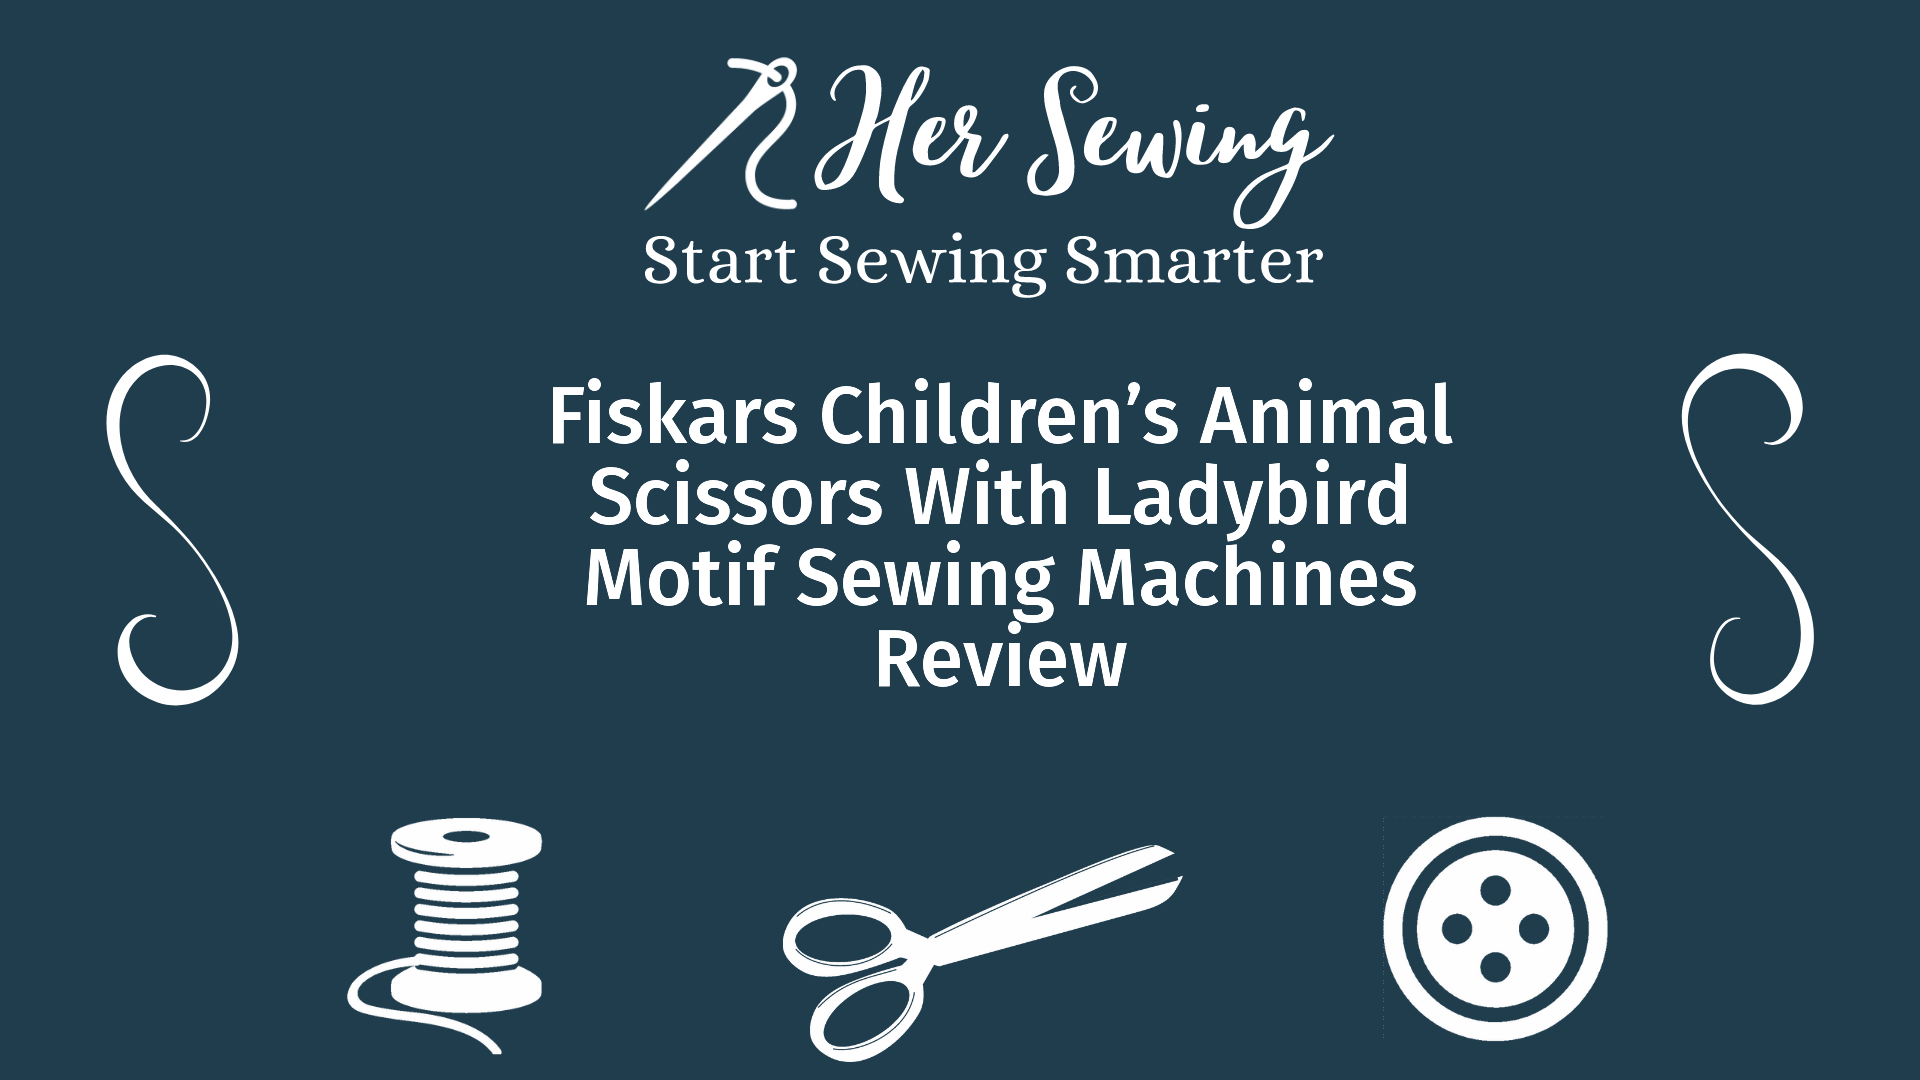 Fiskars Children’s Animal Scissors With Ladybird Motif Sewing Machines Review